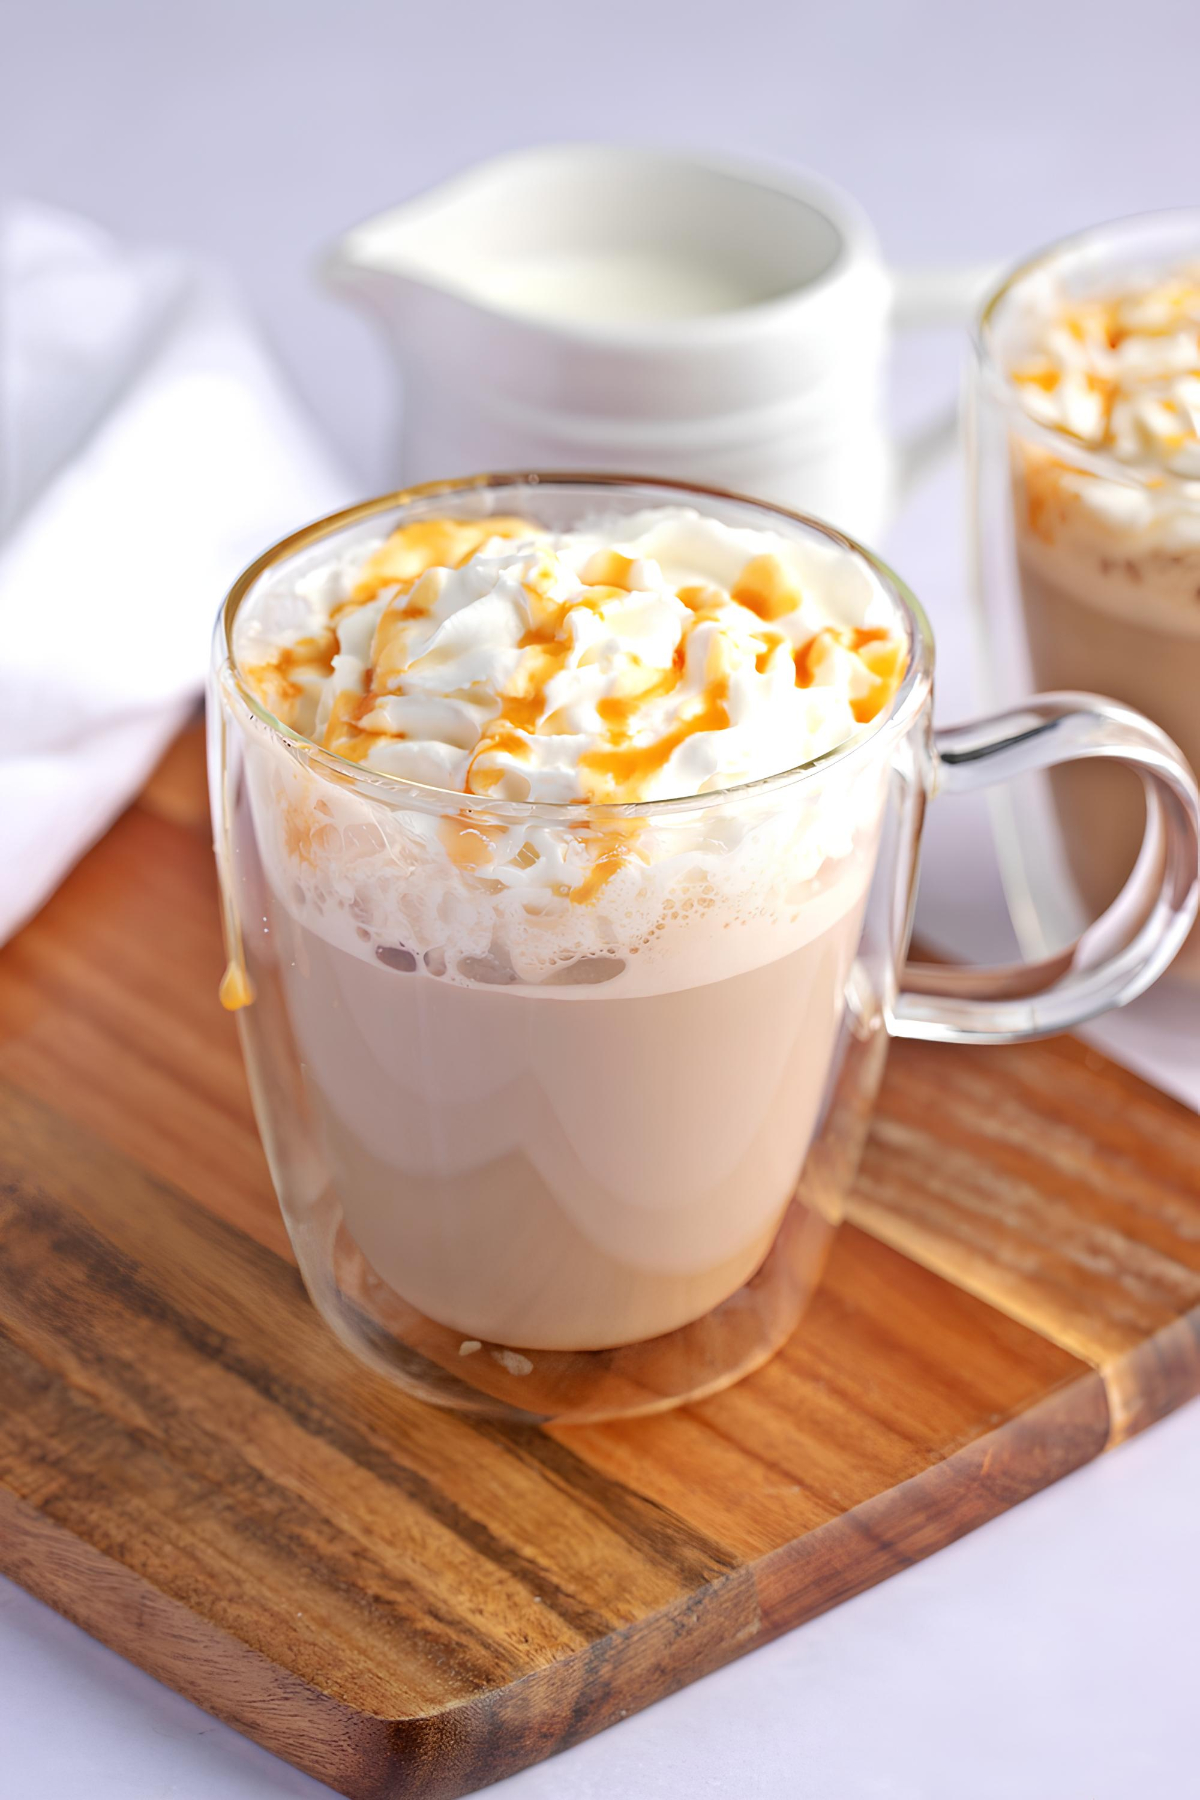 Copycat Starbucks Caramel Macchiato Recipe featuring Glass mug with homemade Starbucks caramel macchiato with whipped cream and drizzle of caramel on top.